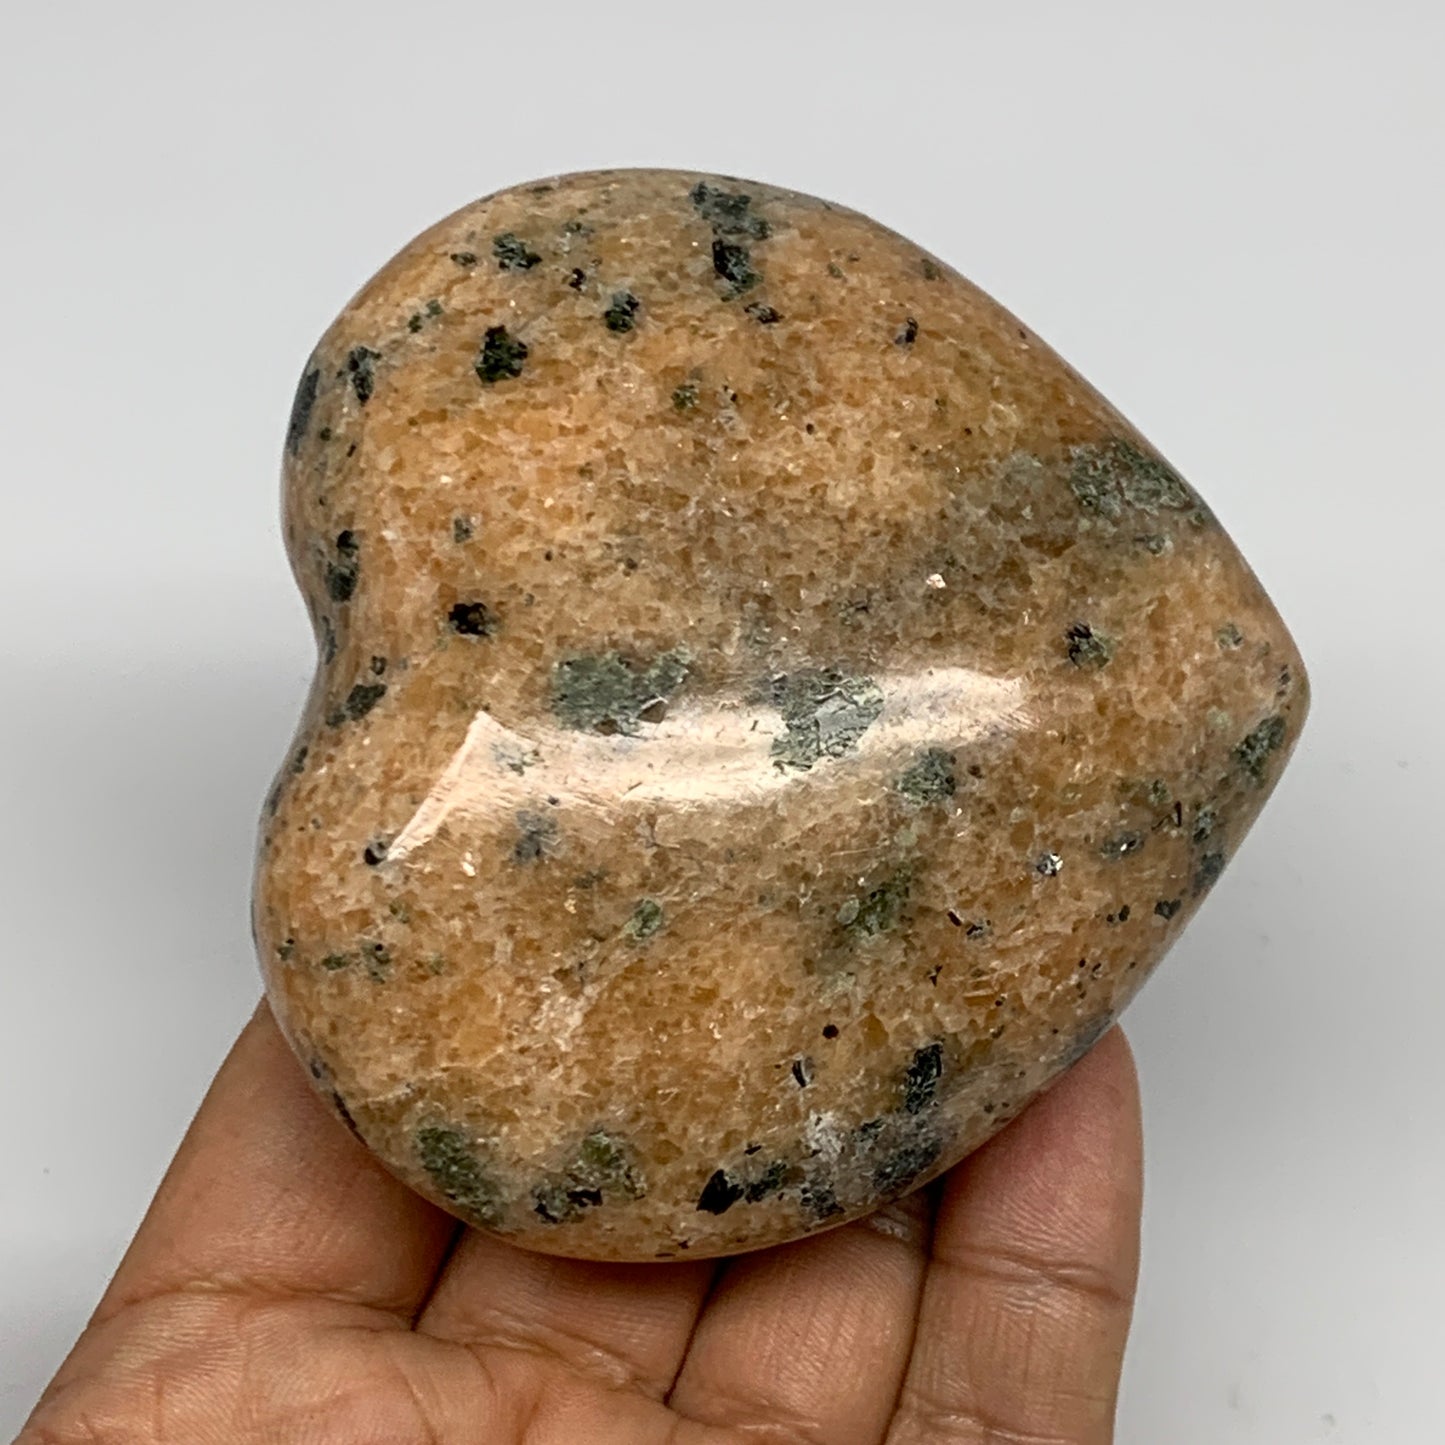 304.3g, 3"x3.2"x1.3" Orange Calcite Heart Gemstones from Madagascar, B17167